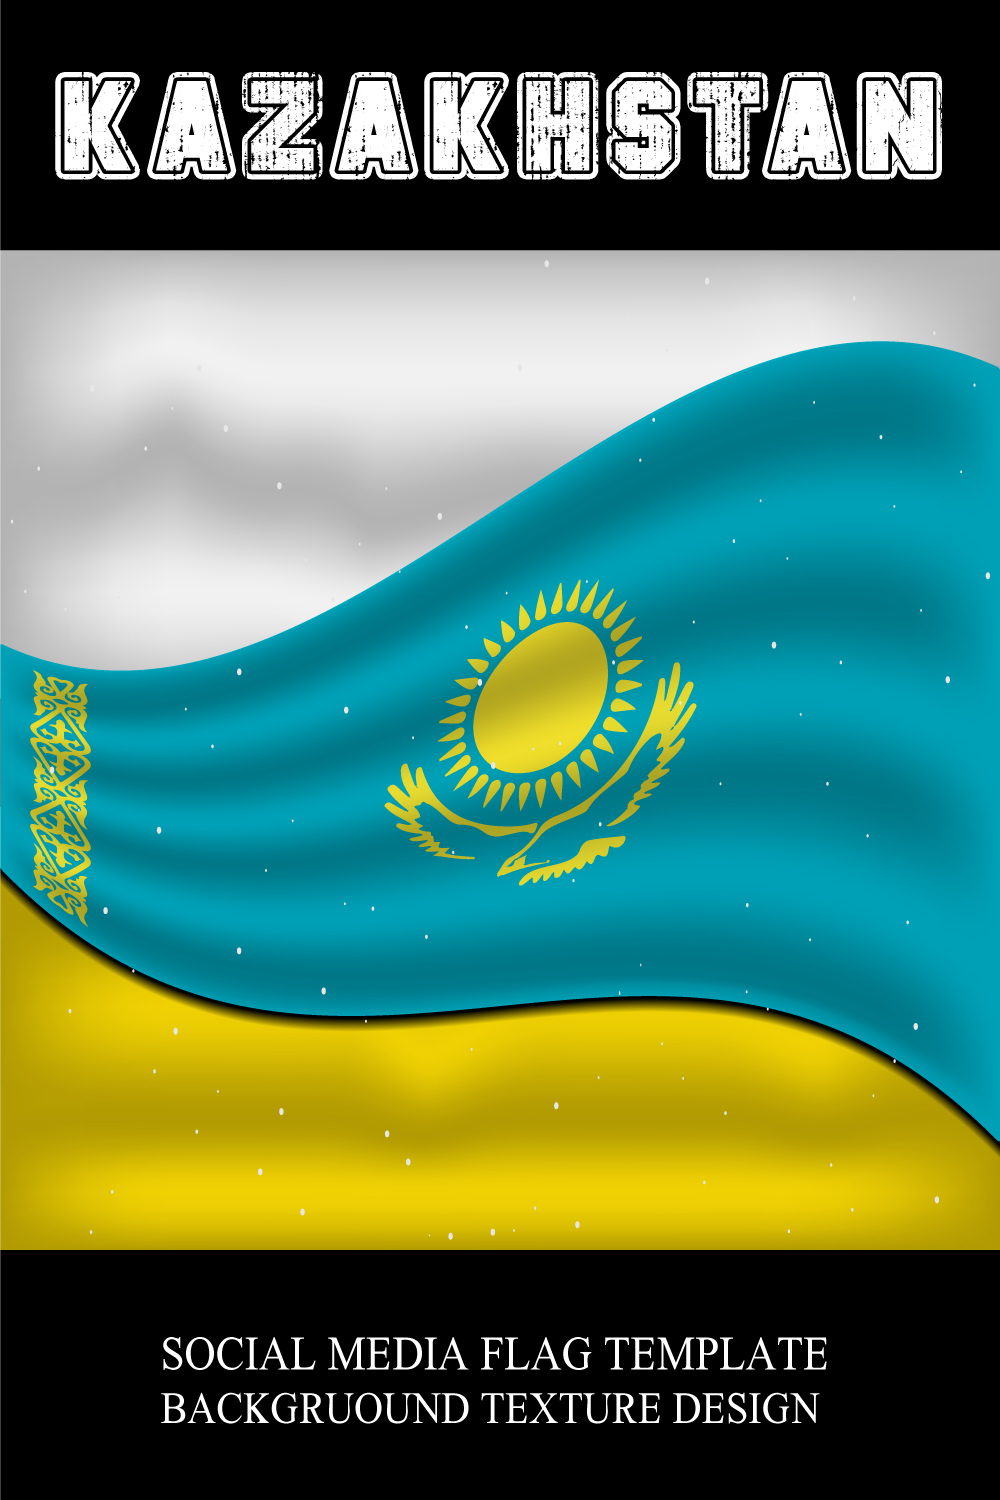 Amazing image of Kazakhstan flag.